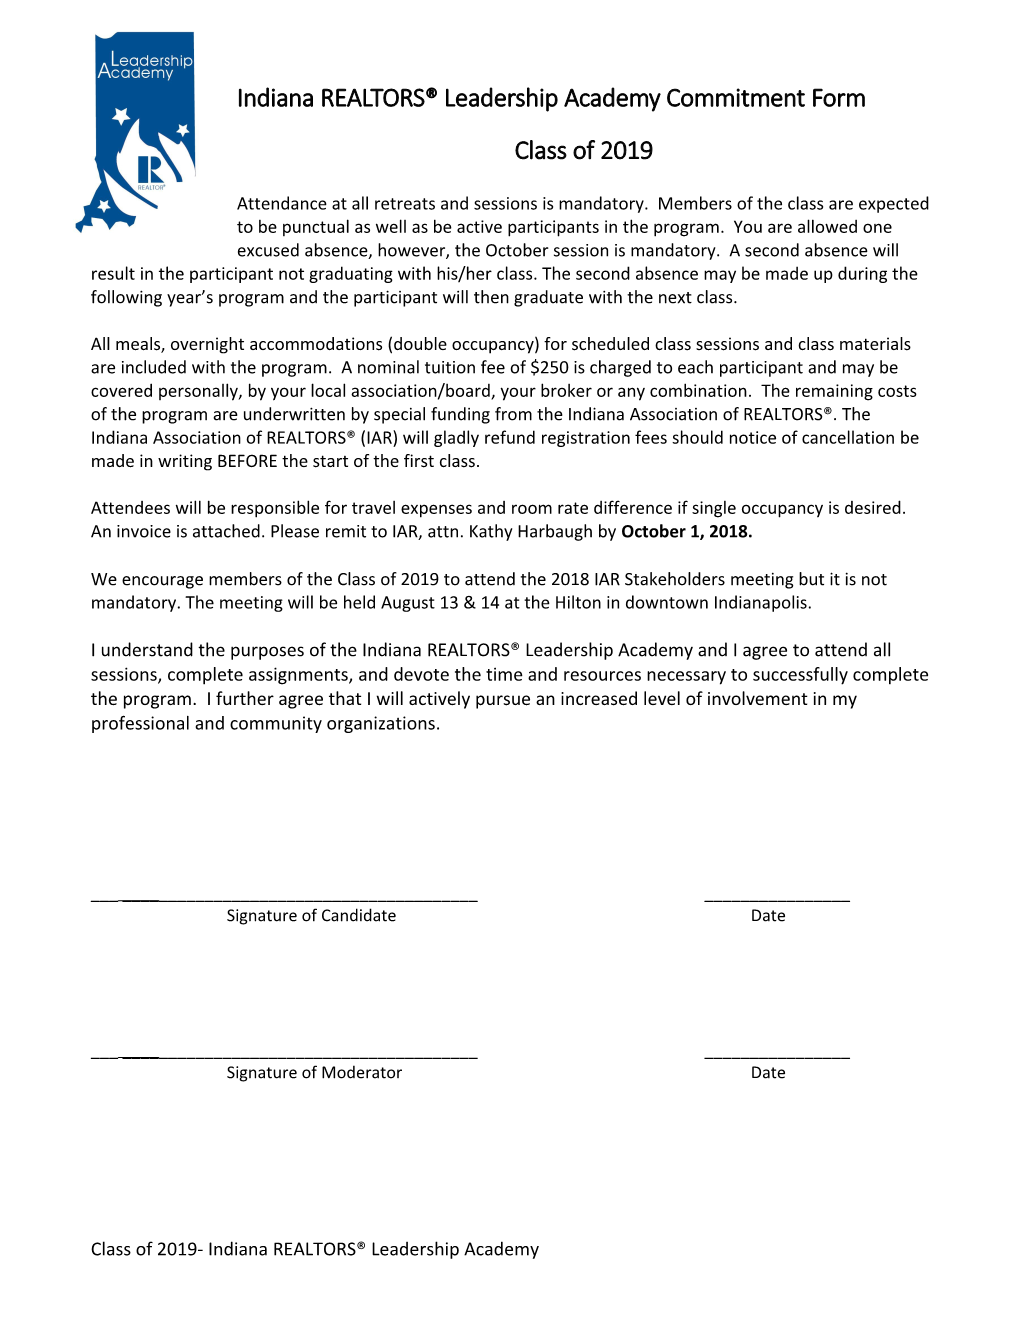 Indiana REALTORS Leadership Academy Commitment Form